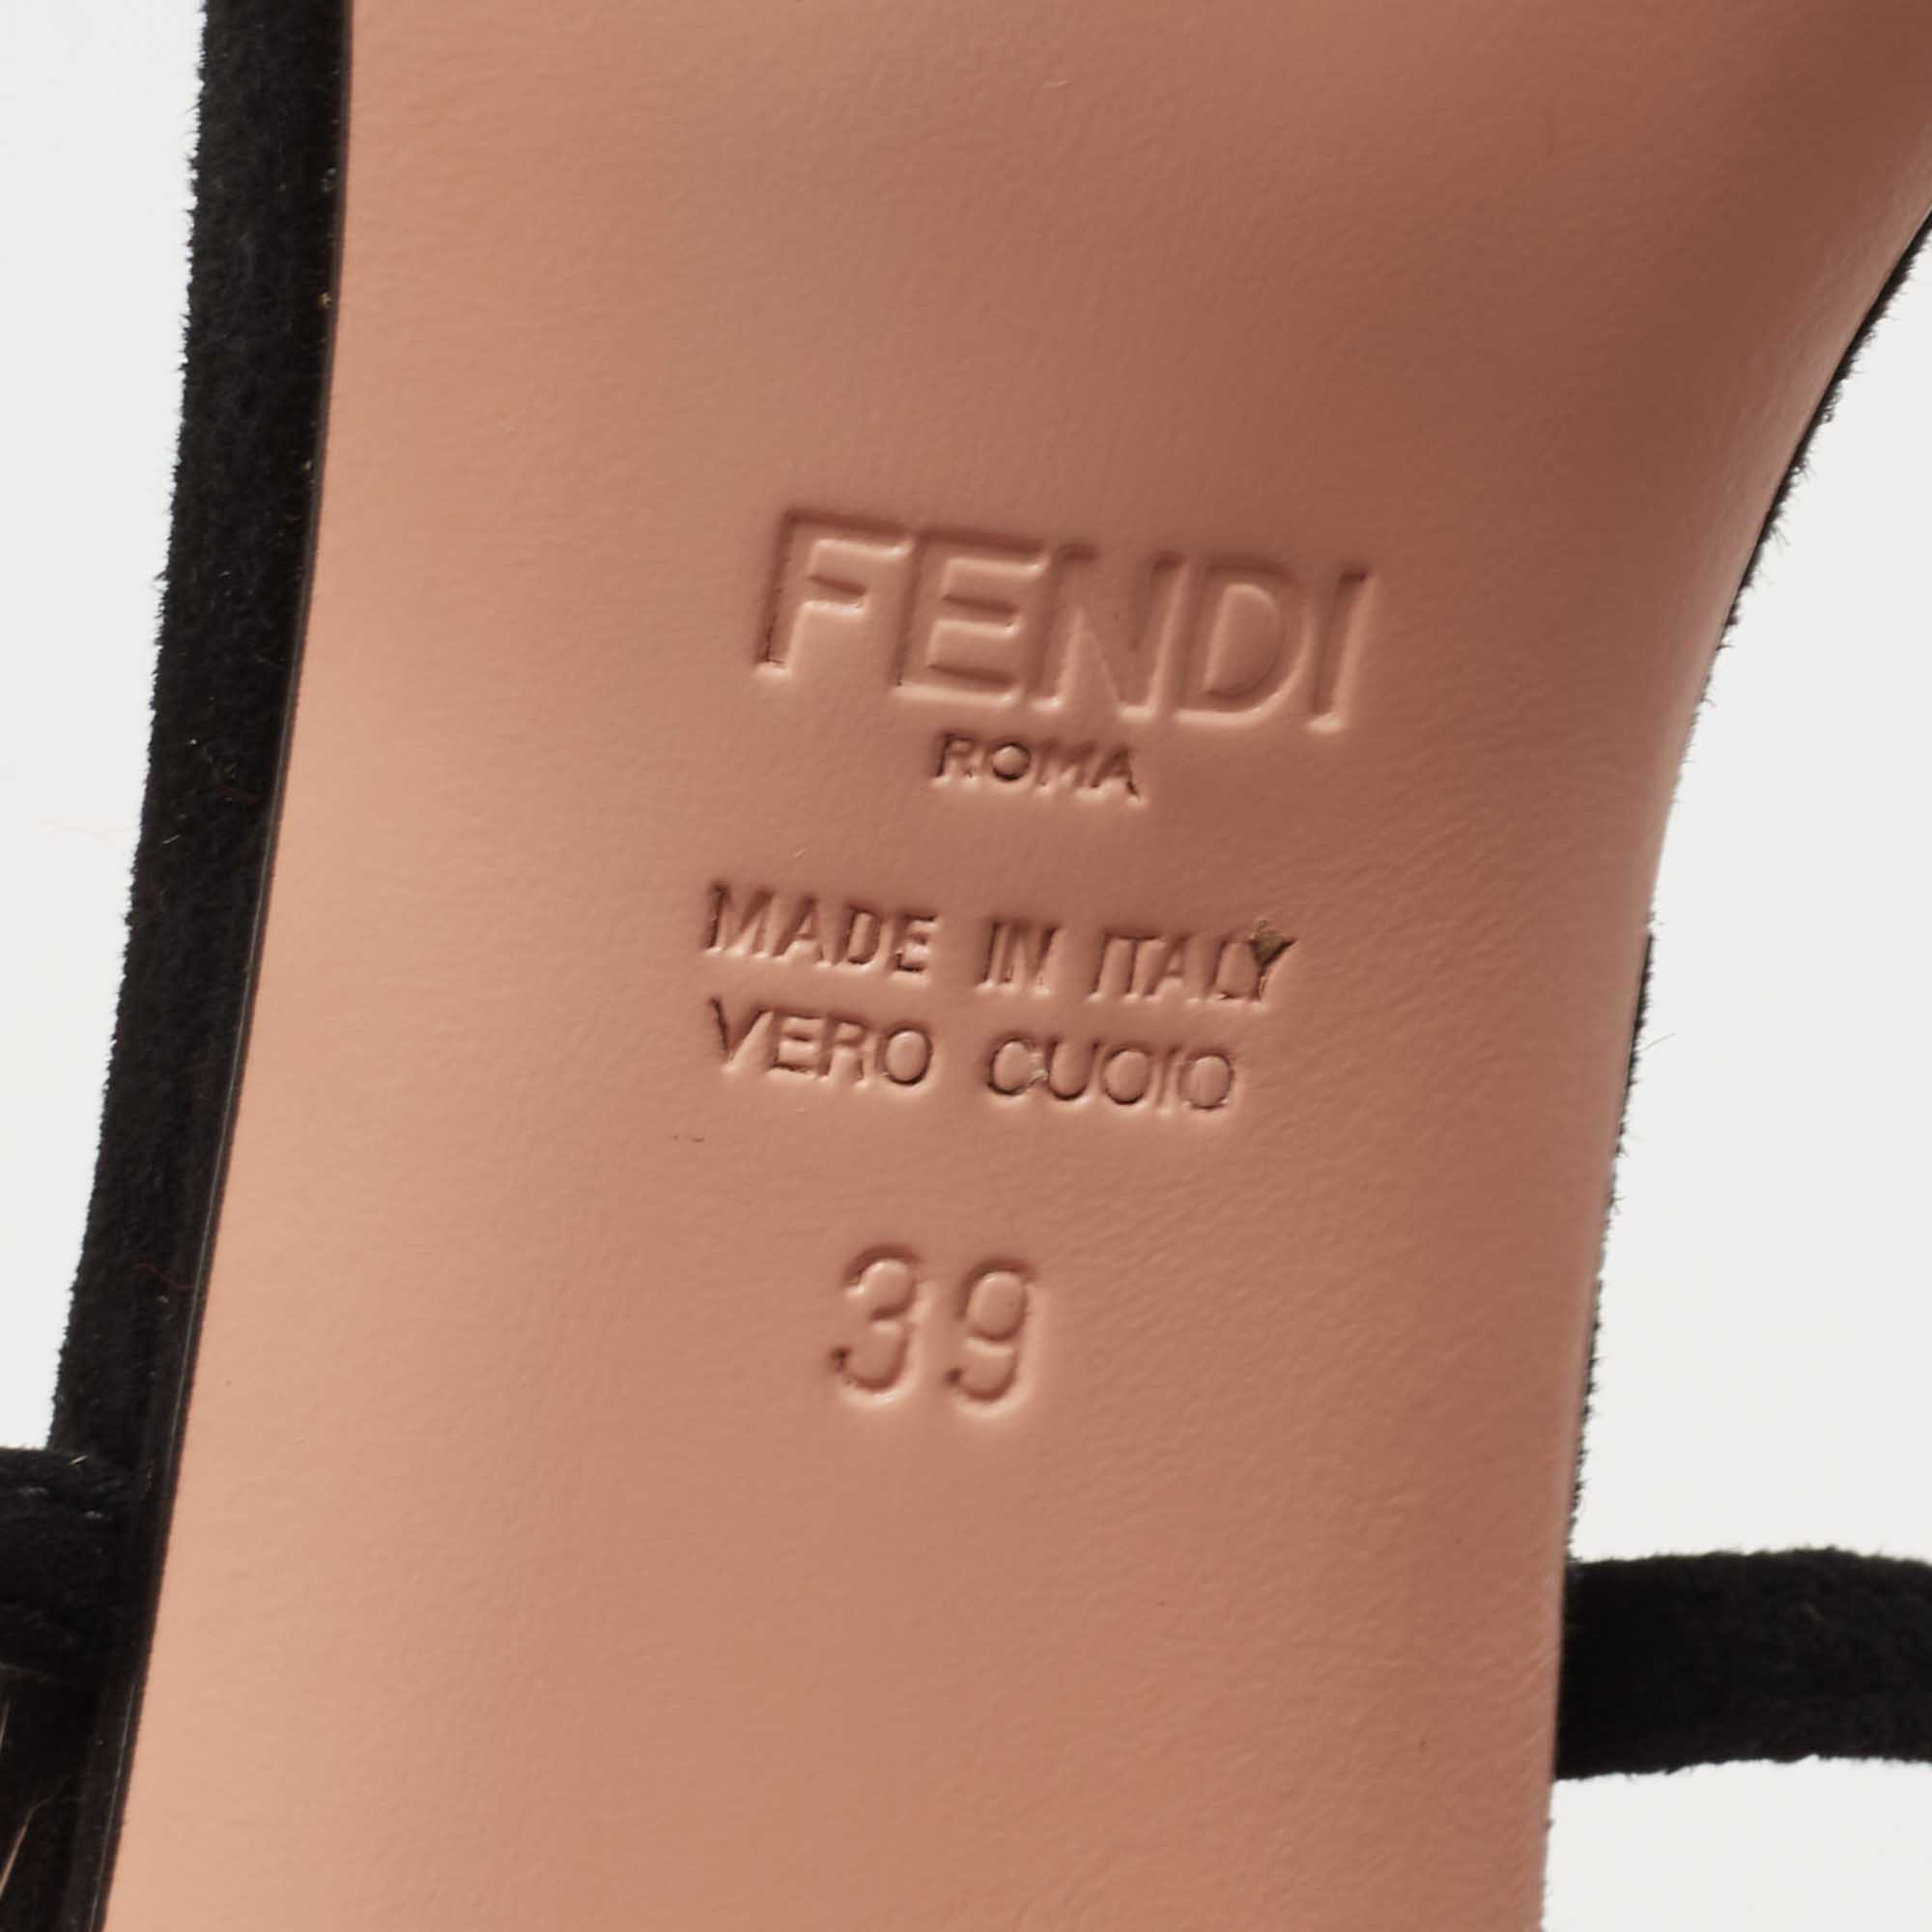 Fendi Black Suede Mink Fur Pompoms Ankle Strap Sandals Size 39